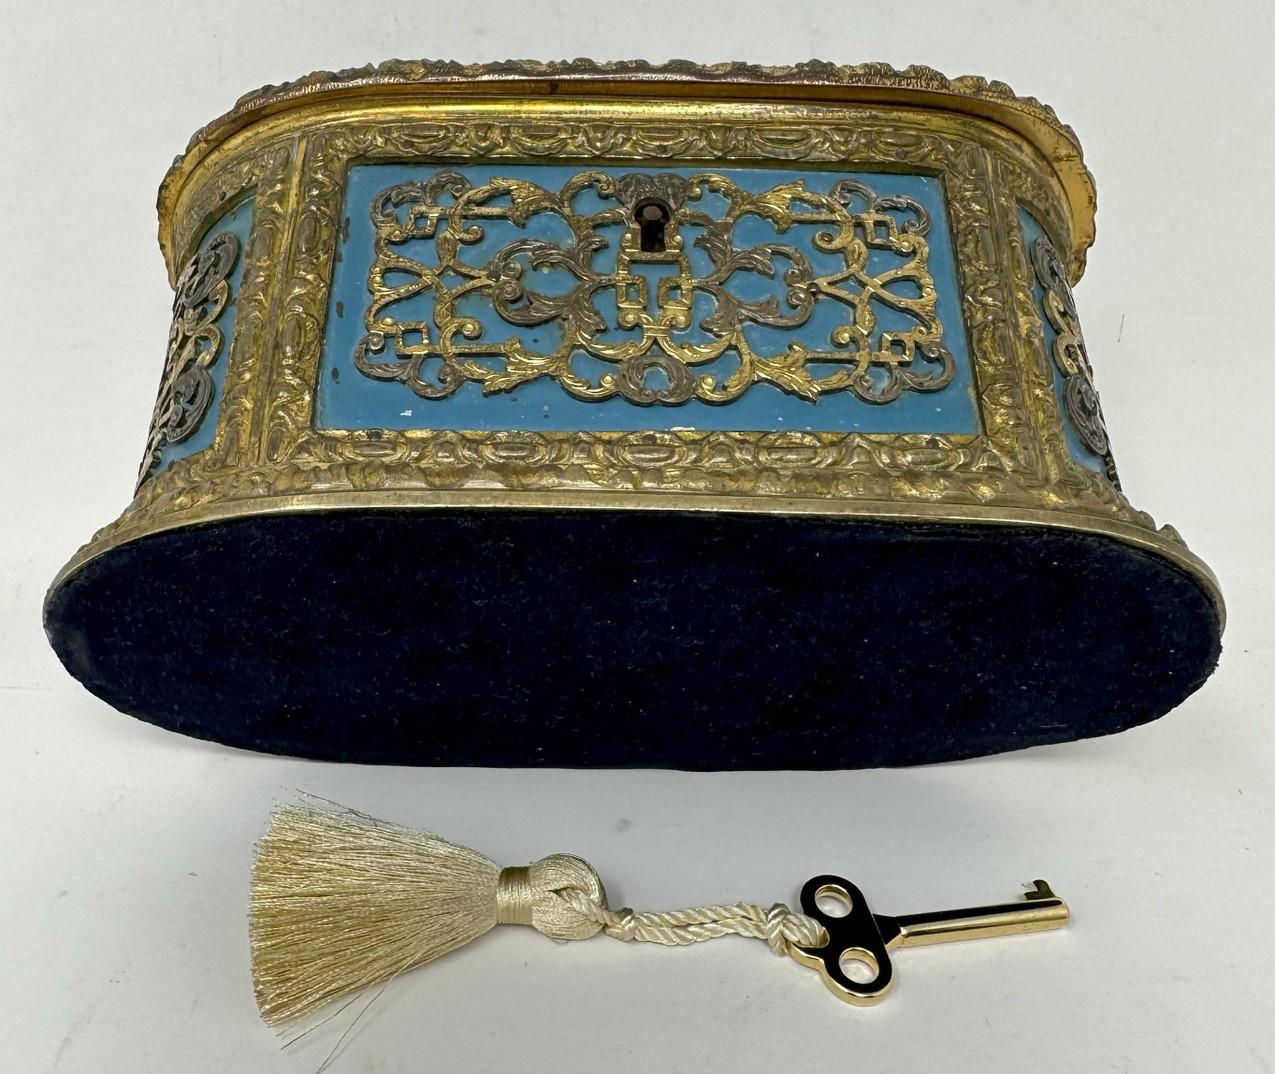 19th Century Antique French Ormolu Gilt Bronze Dore Casket Jewelry Box Sevres Style 1860 19Ct